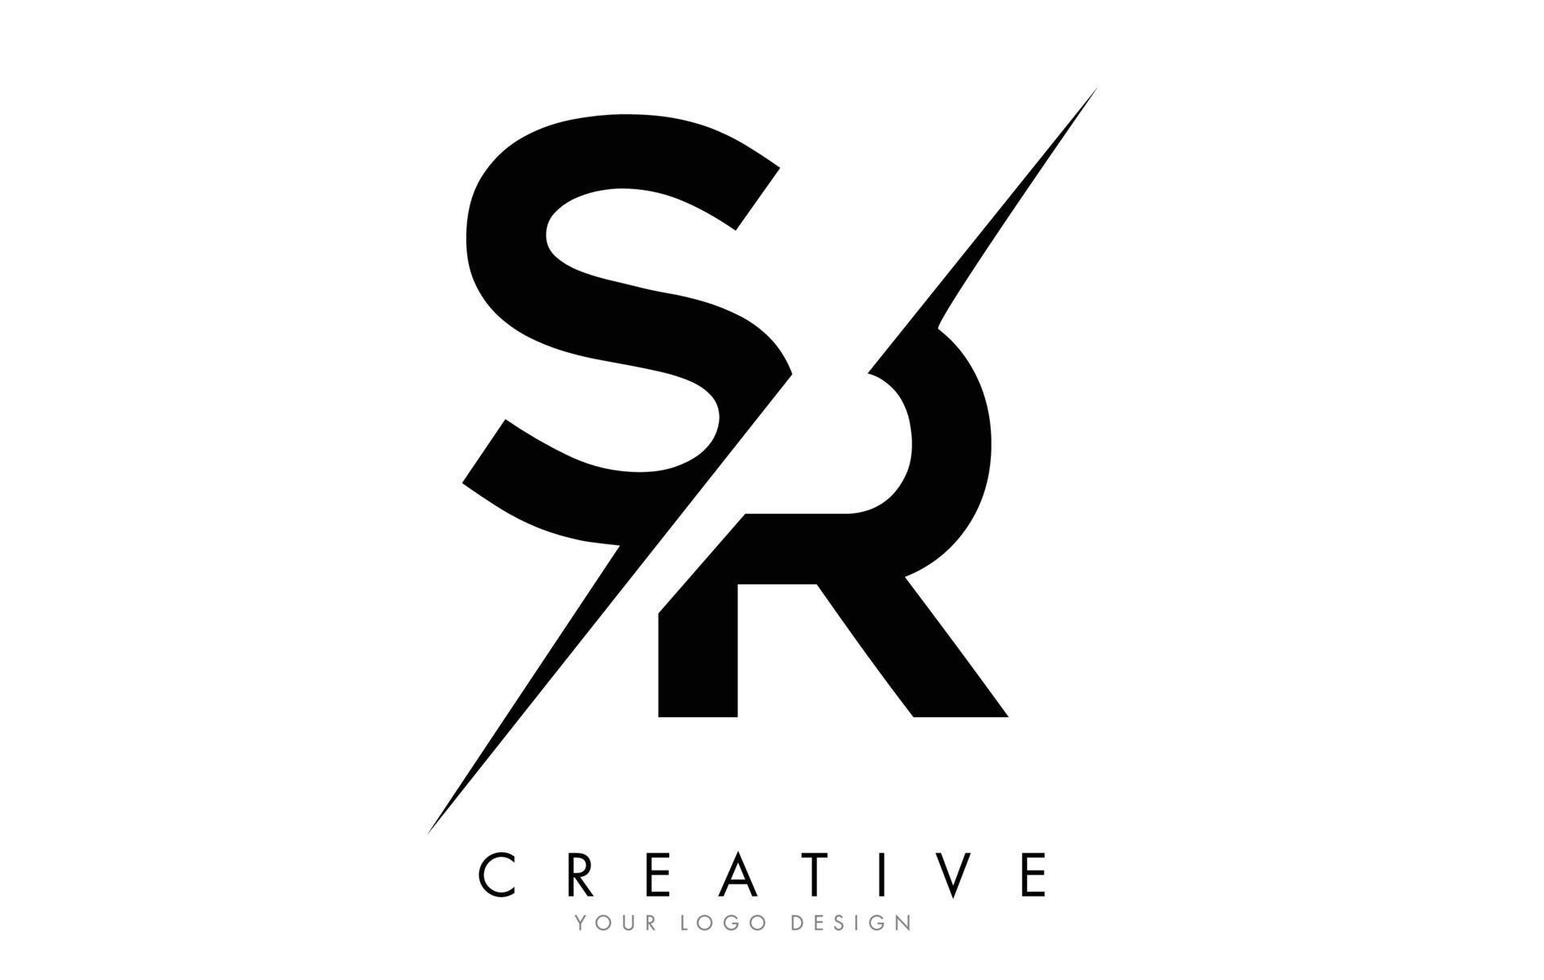 SR S R Letter Logo Design with a Creative Cut. vector